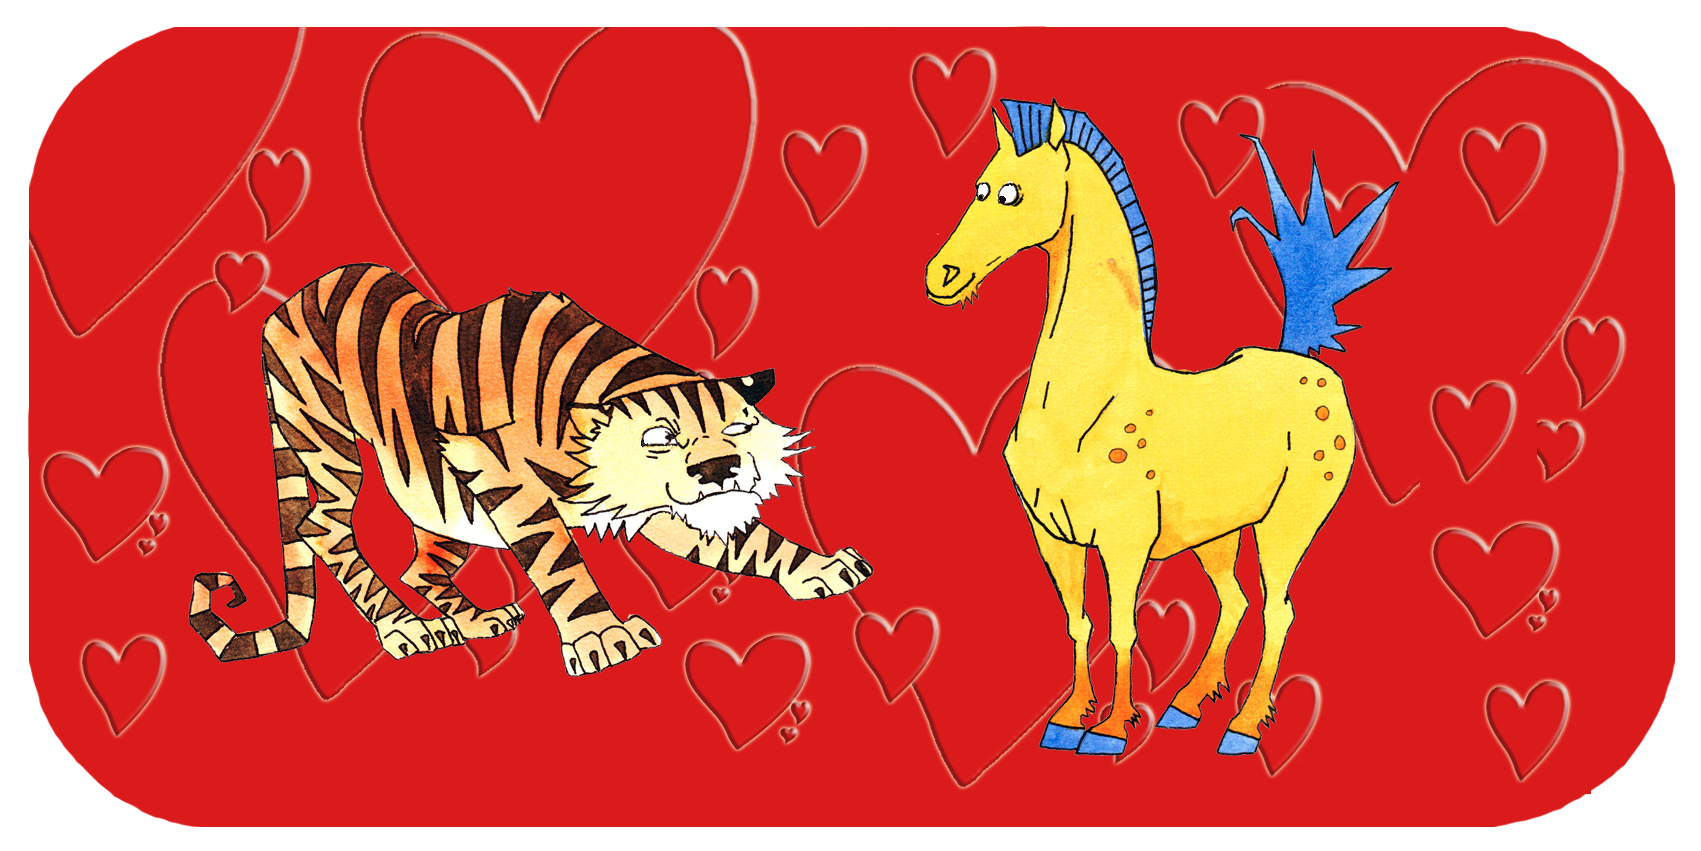 Chinese zodiac animals | Partner, love, best match | The Tiger